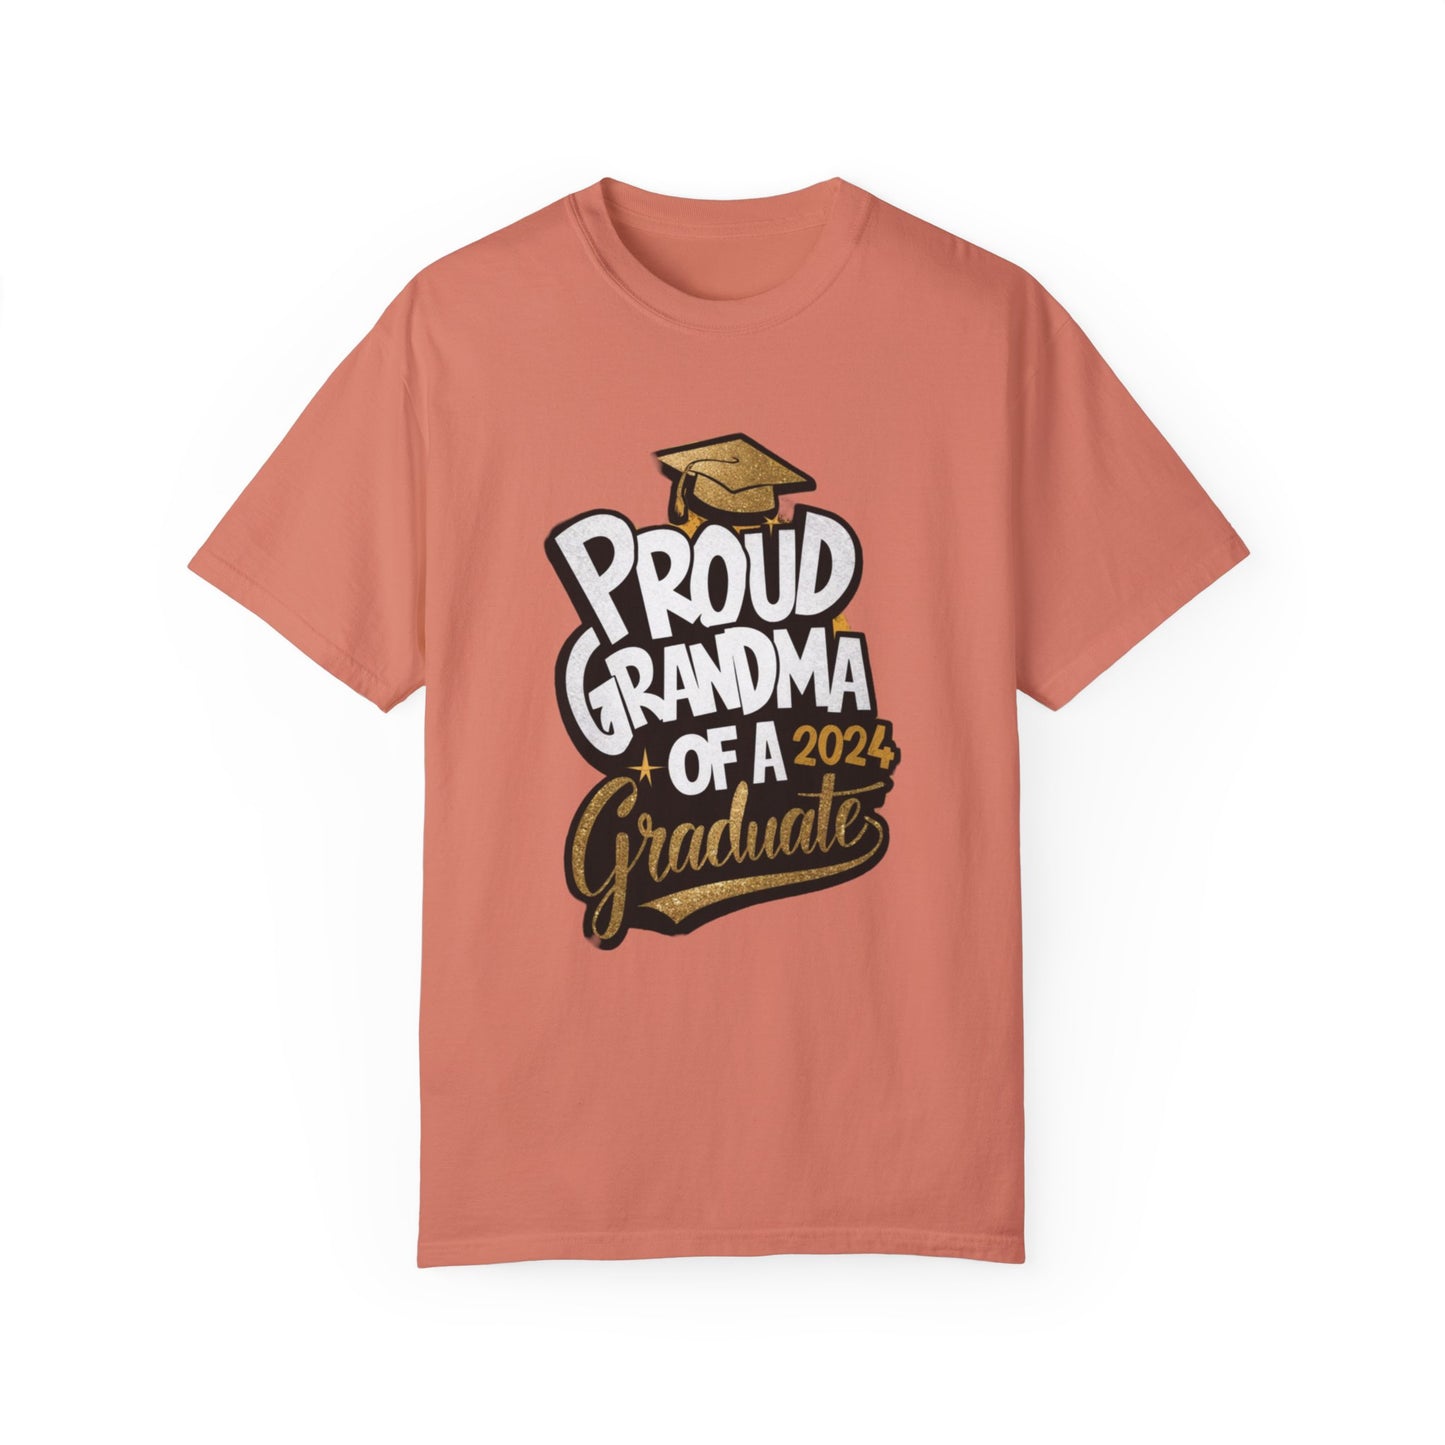 Proud of Grandma 2024 Graduate Unisex Garment-dyed T-shirt Cotton Funny Humorous Graphic Soft Premium Unisex Men Women Terracotta T-shirt Birthday Gift-14